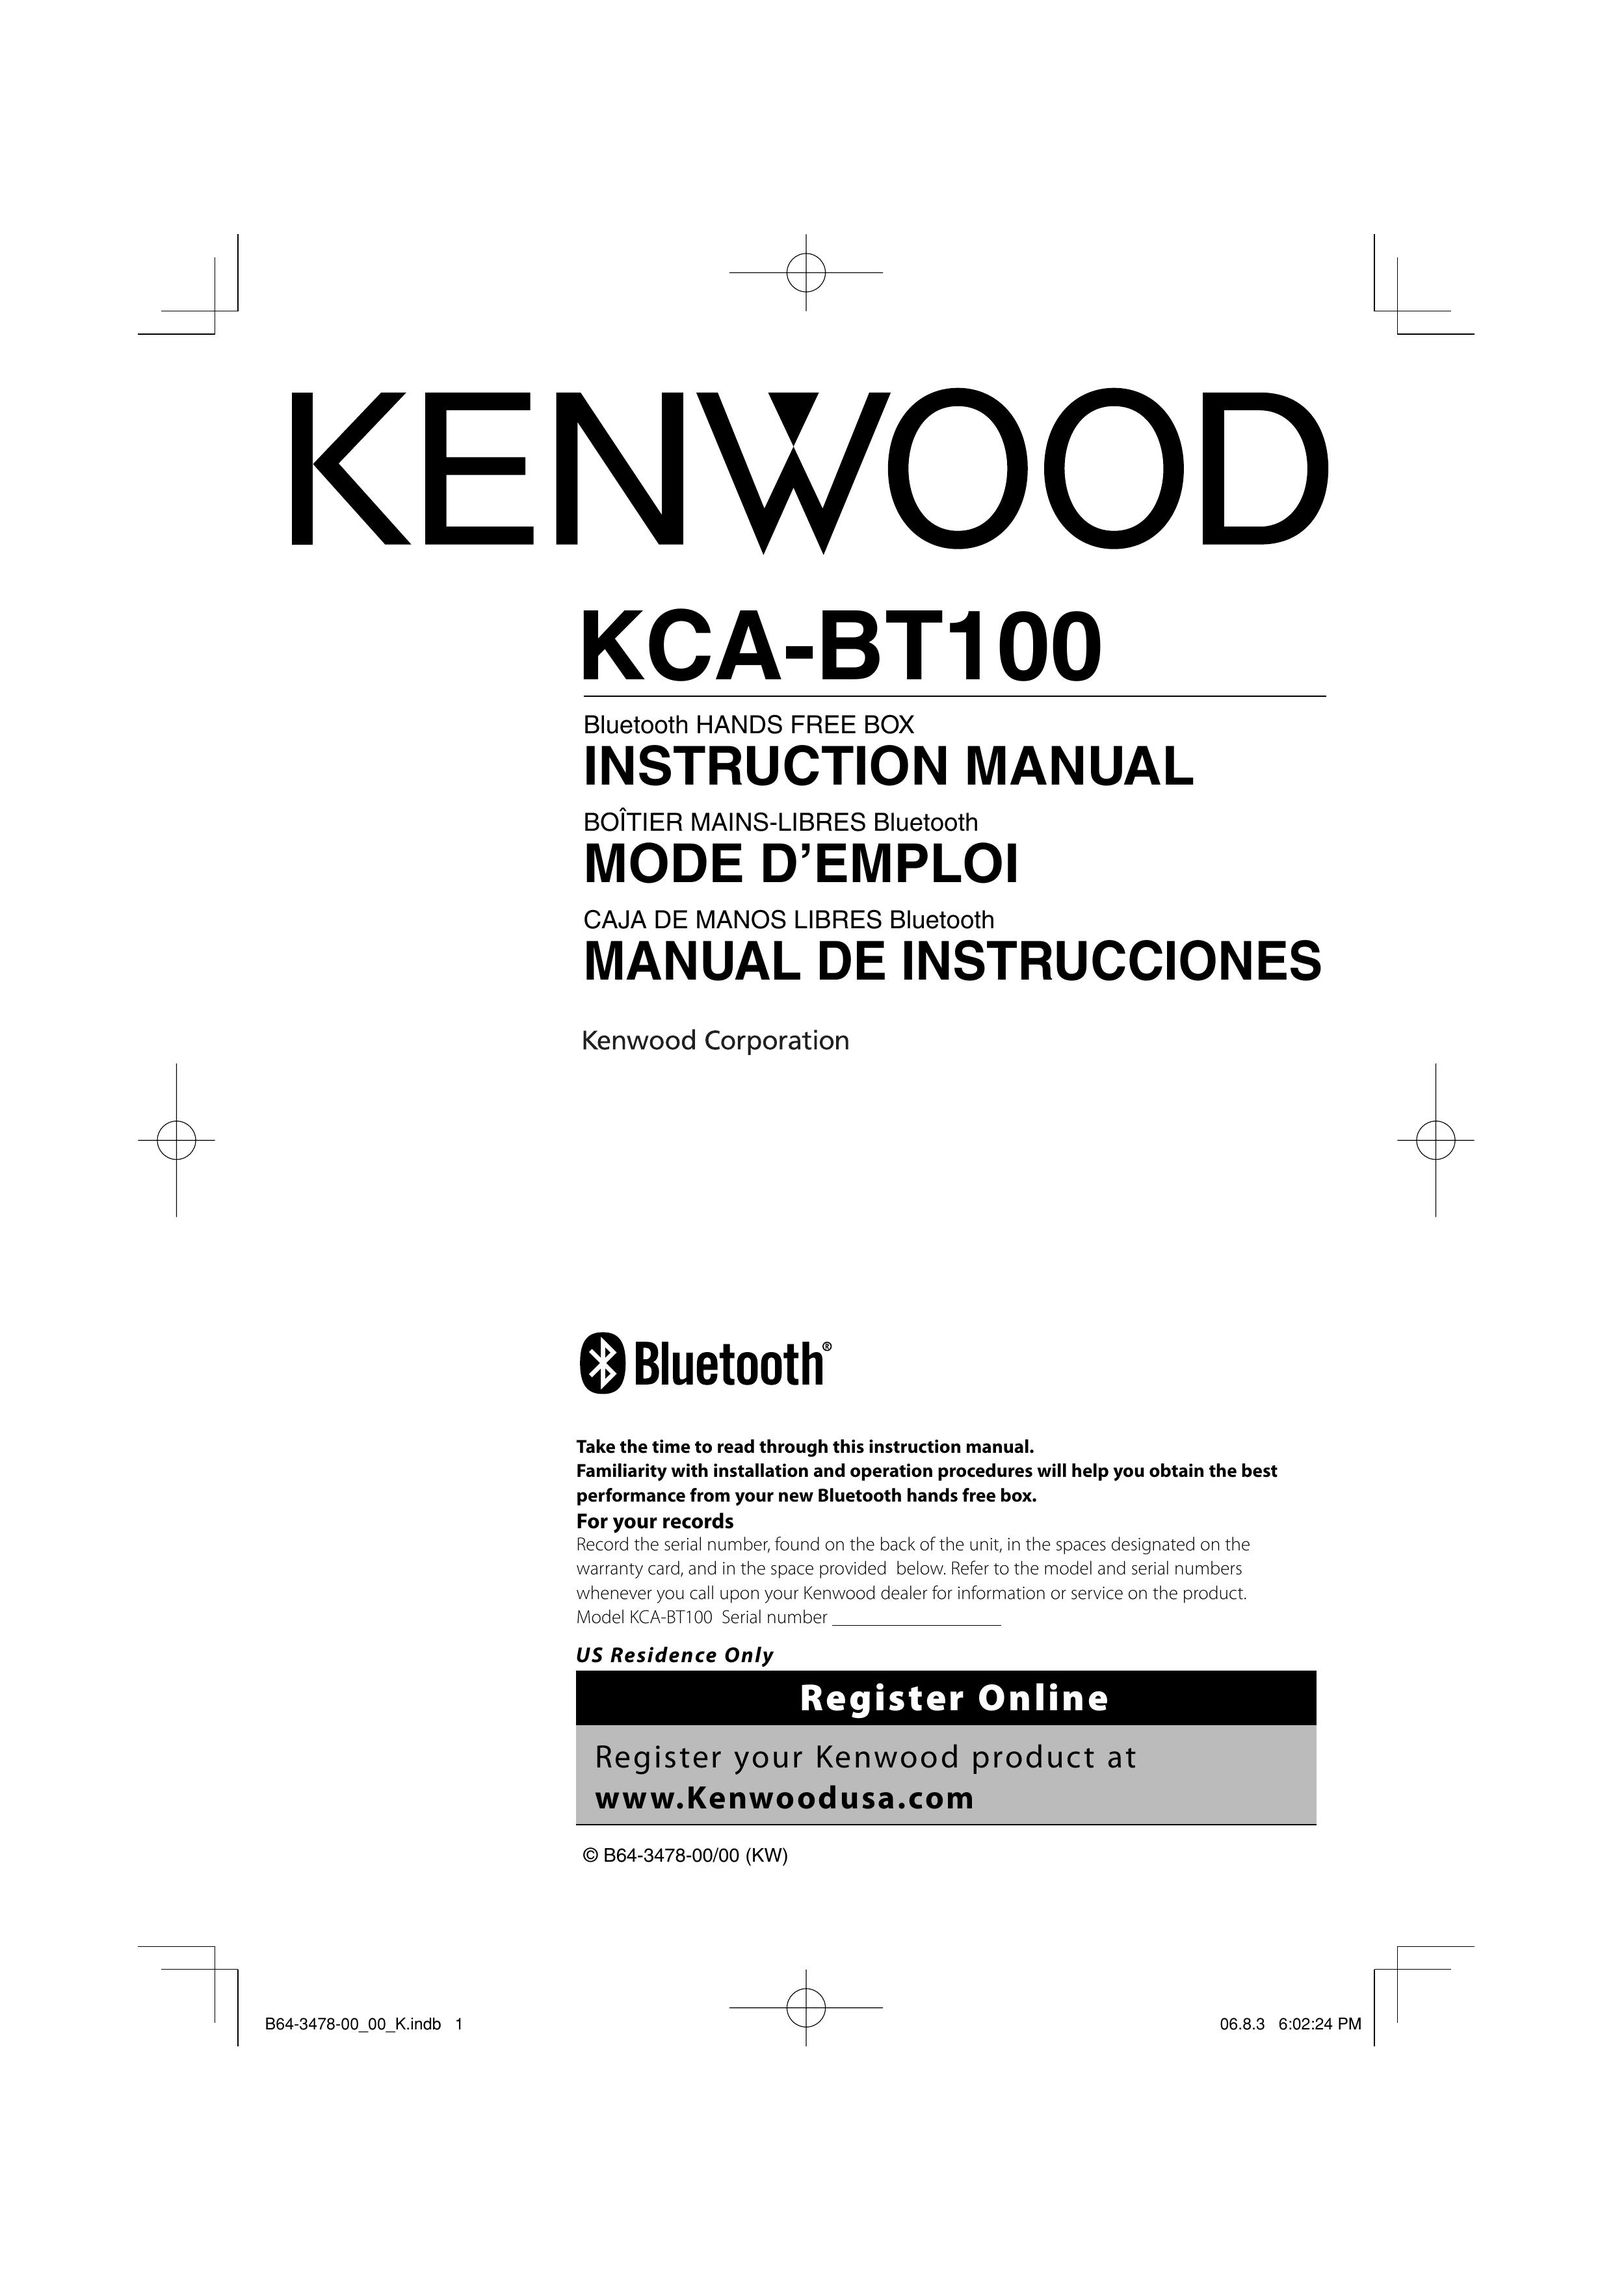 Kenwood KCA-BT100 Headphones User Manual